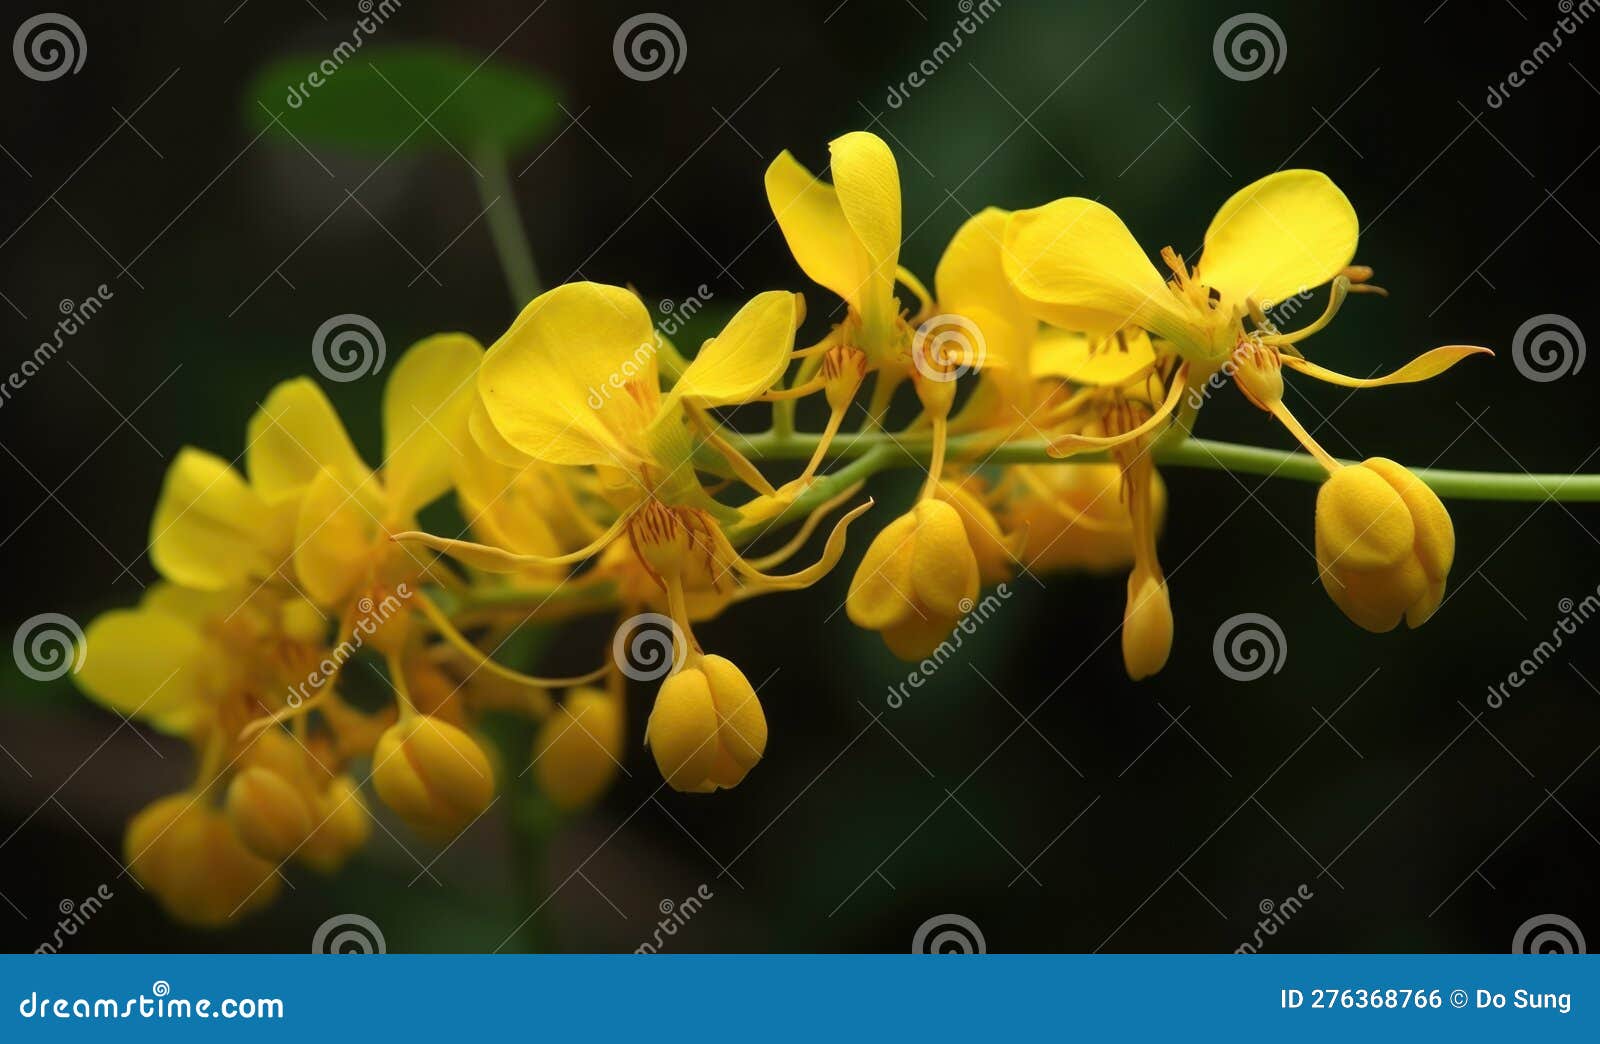 a beautiful photograph of cassia fistula flower